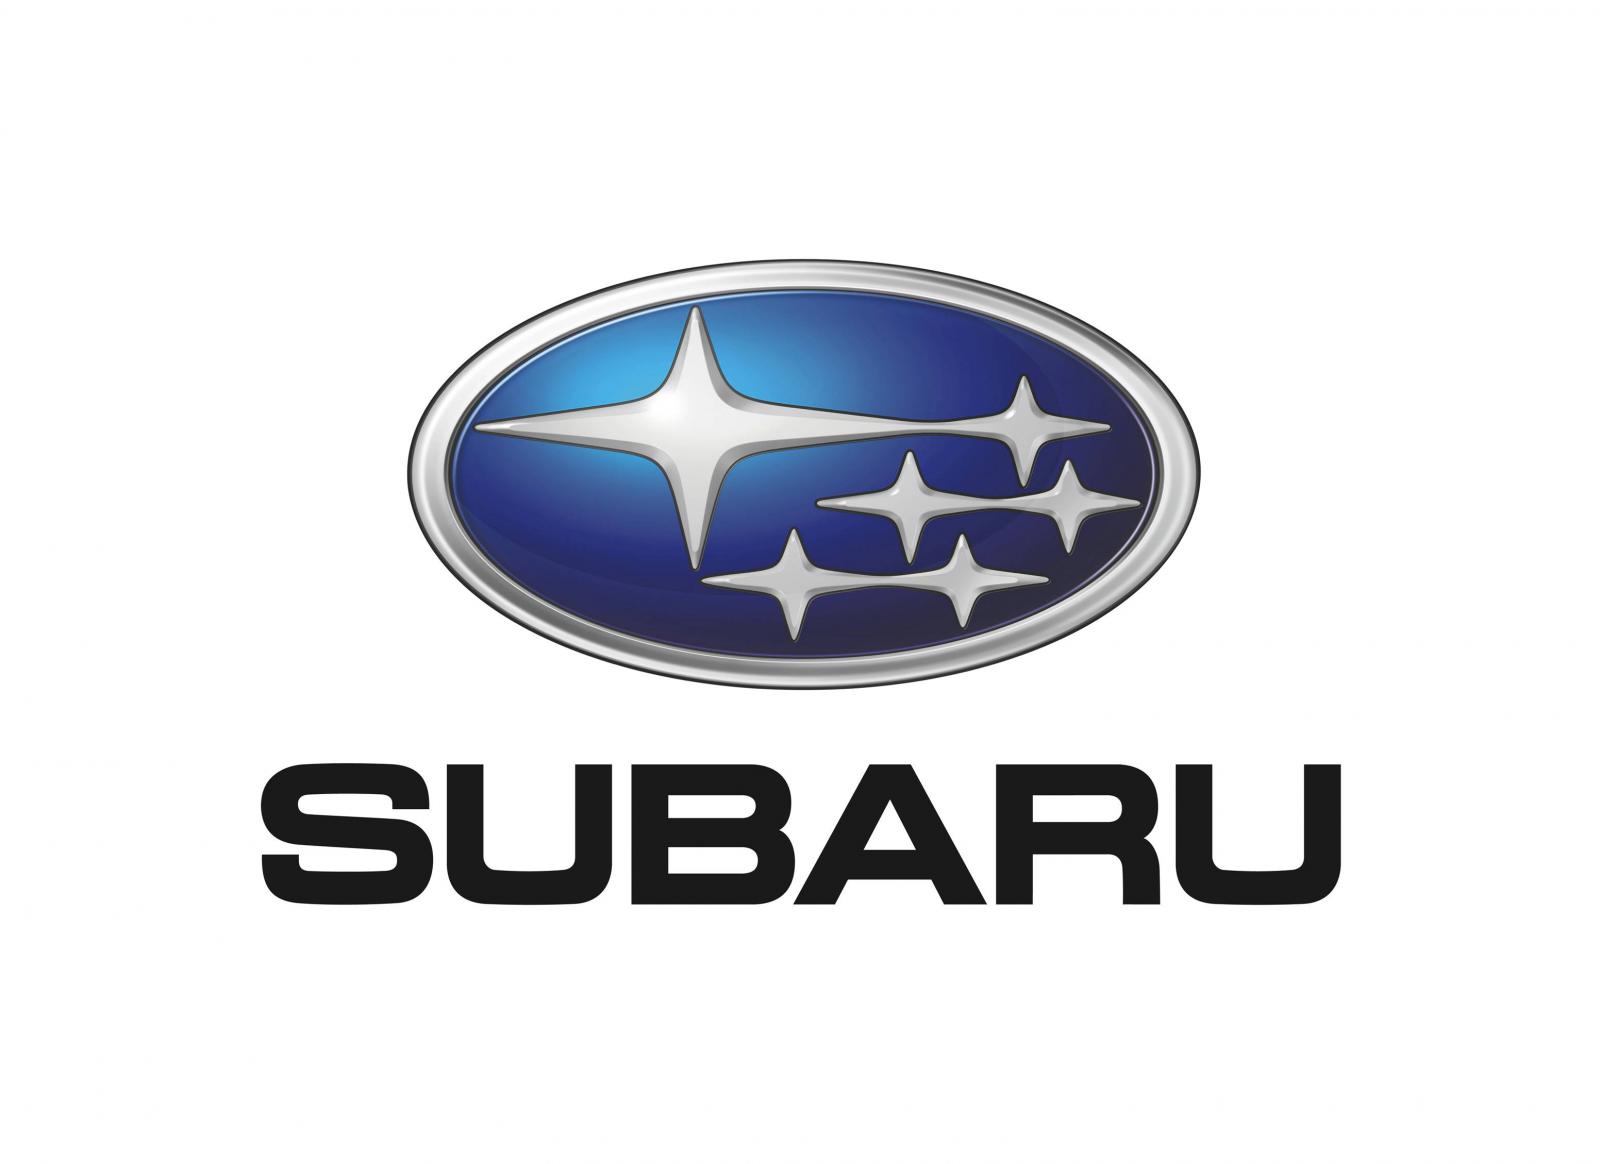 Subaru logo Wallpaper